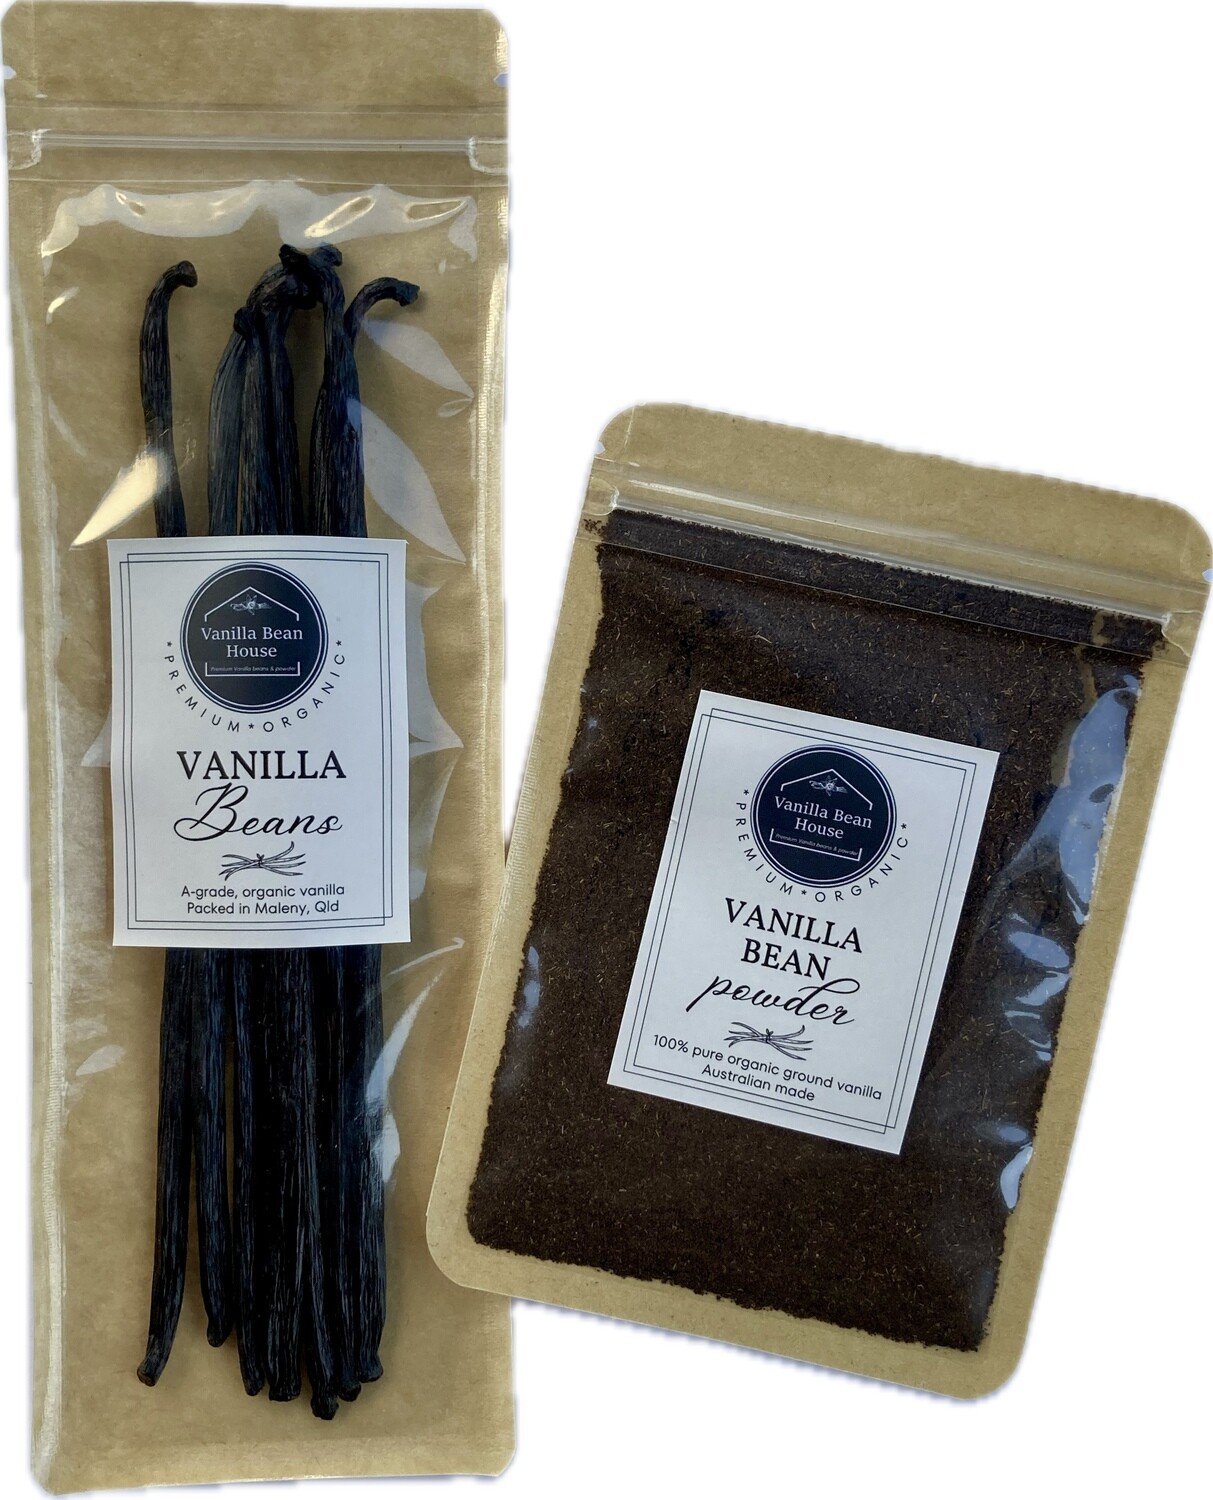 55g Value bundle - 30g of Organic Vanilla Bean Pods &amp; 25g Organic Vanilla Bean Powder.